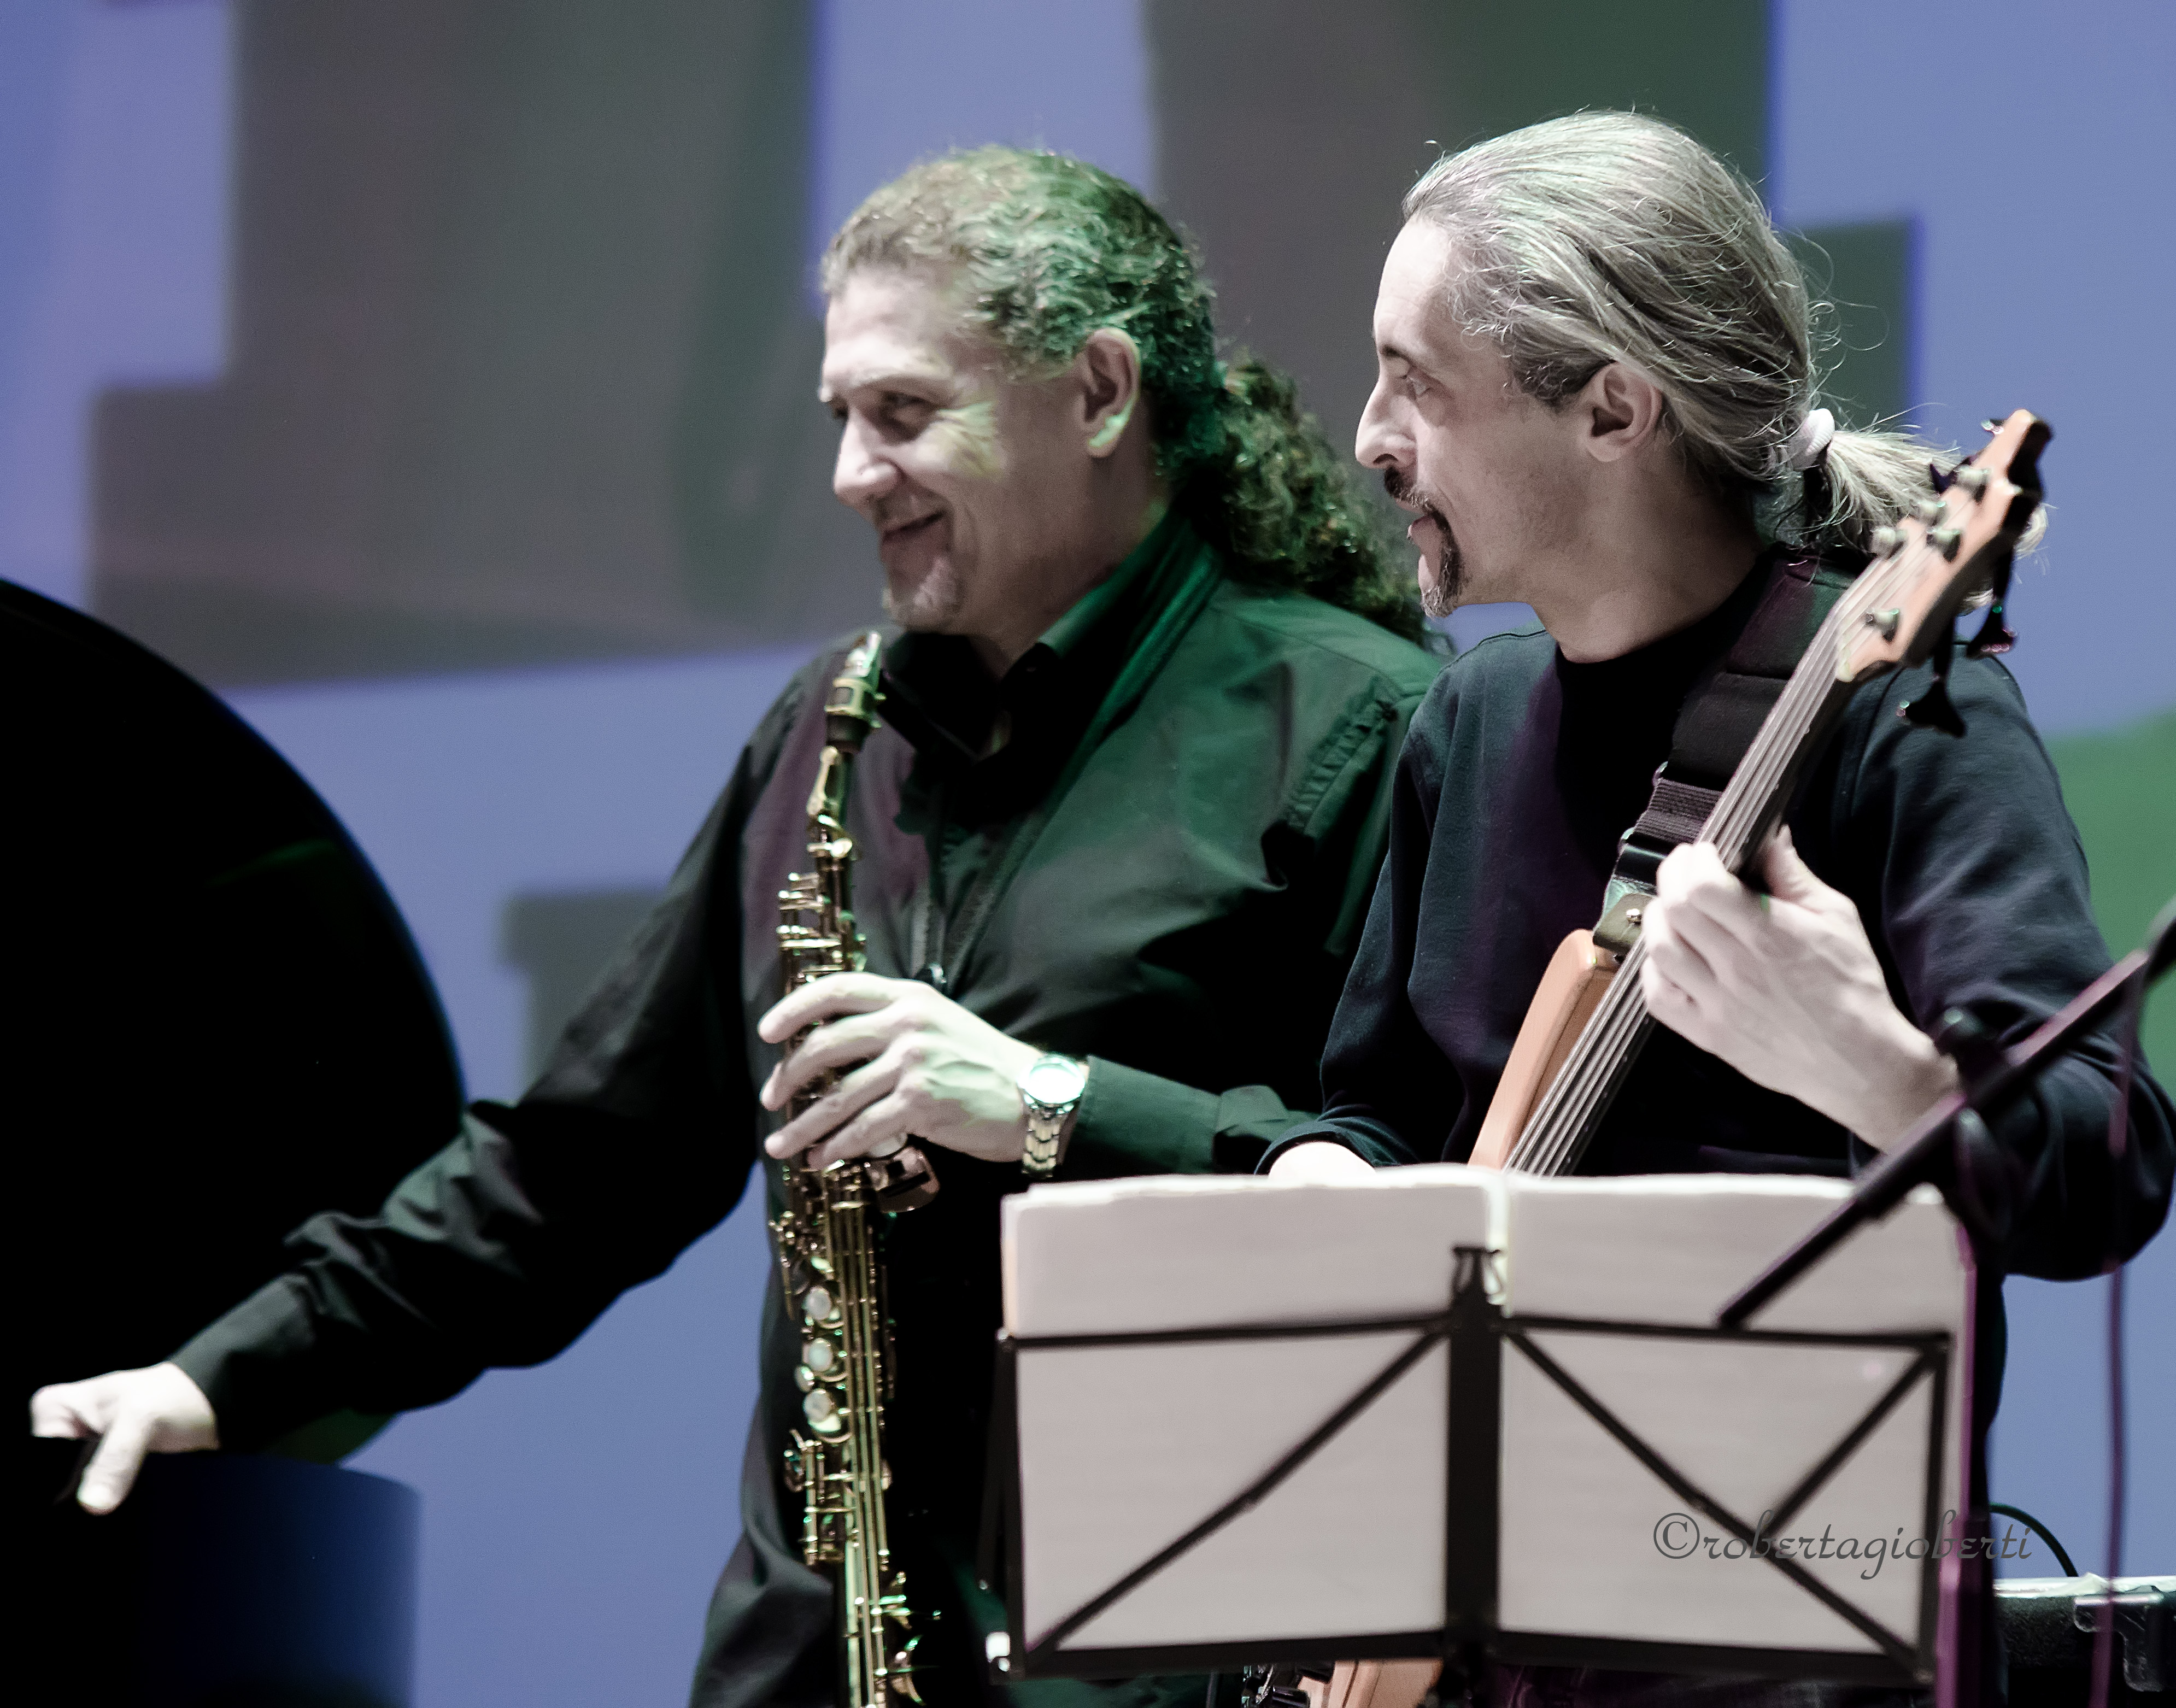 Javier Girotto e Aires Tango live @ Napoli jazz winter Ph Roberta Gioberti